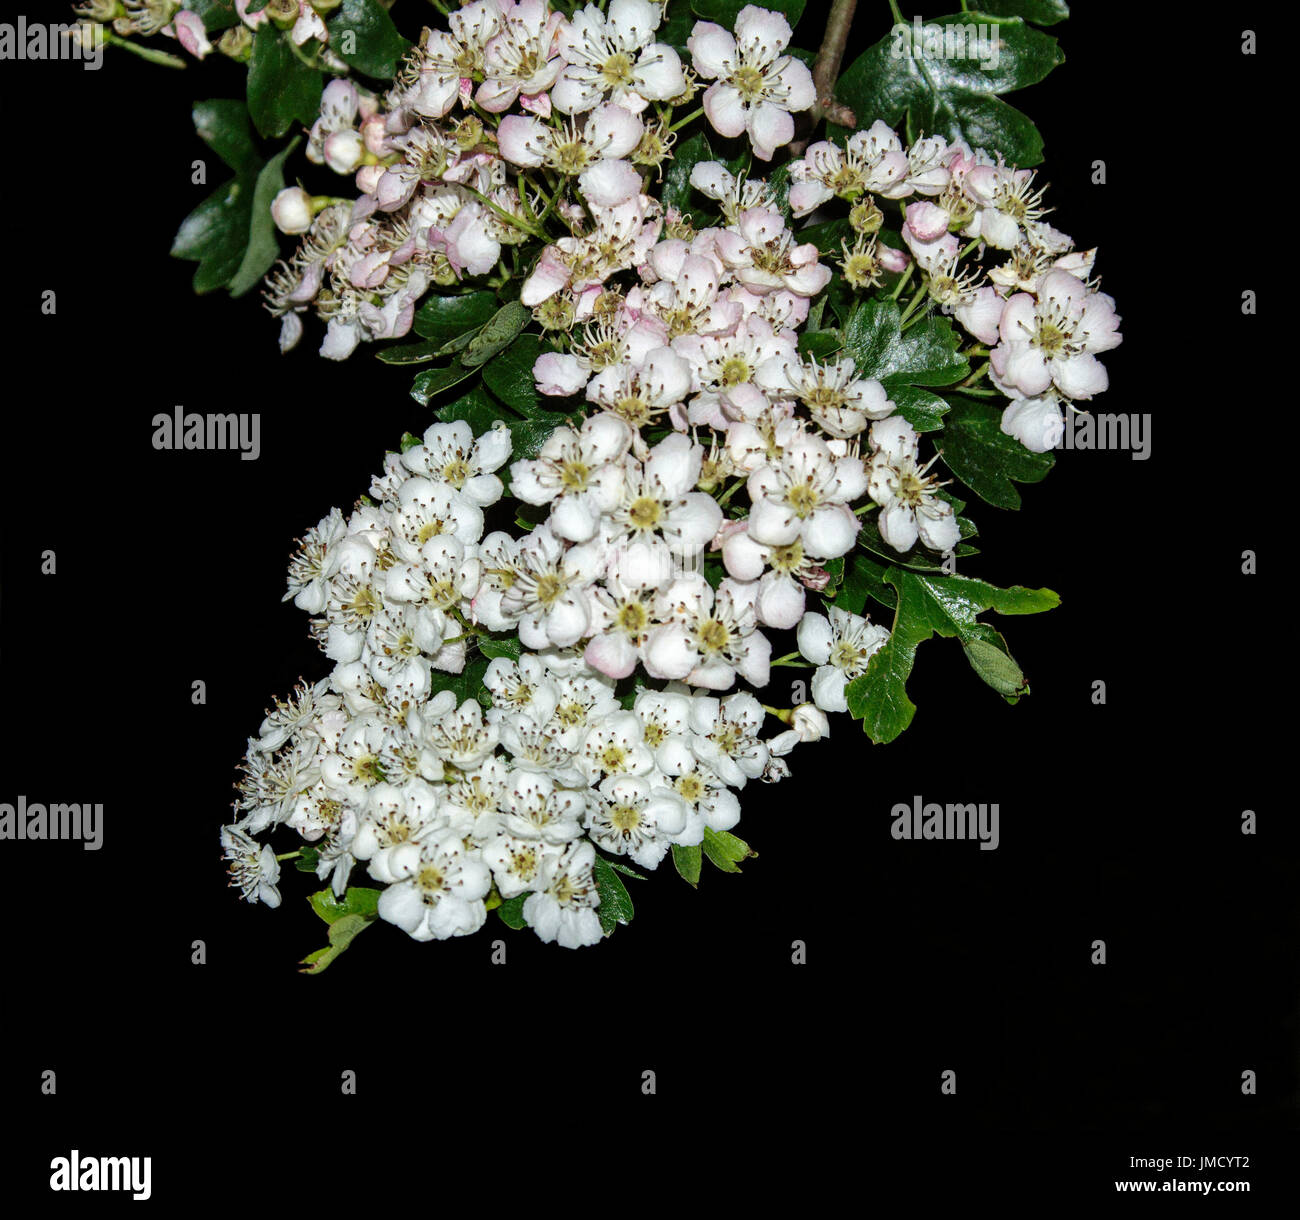 Cluster of perfumed white flowers of Hawthorn, Crataegus monogyna, British wildflowers, against black background Stock Photo